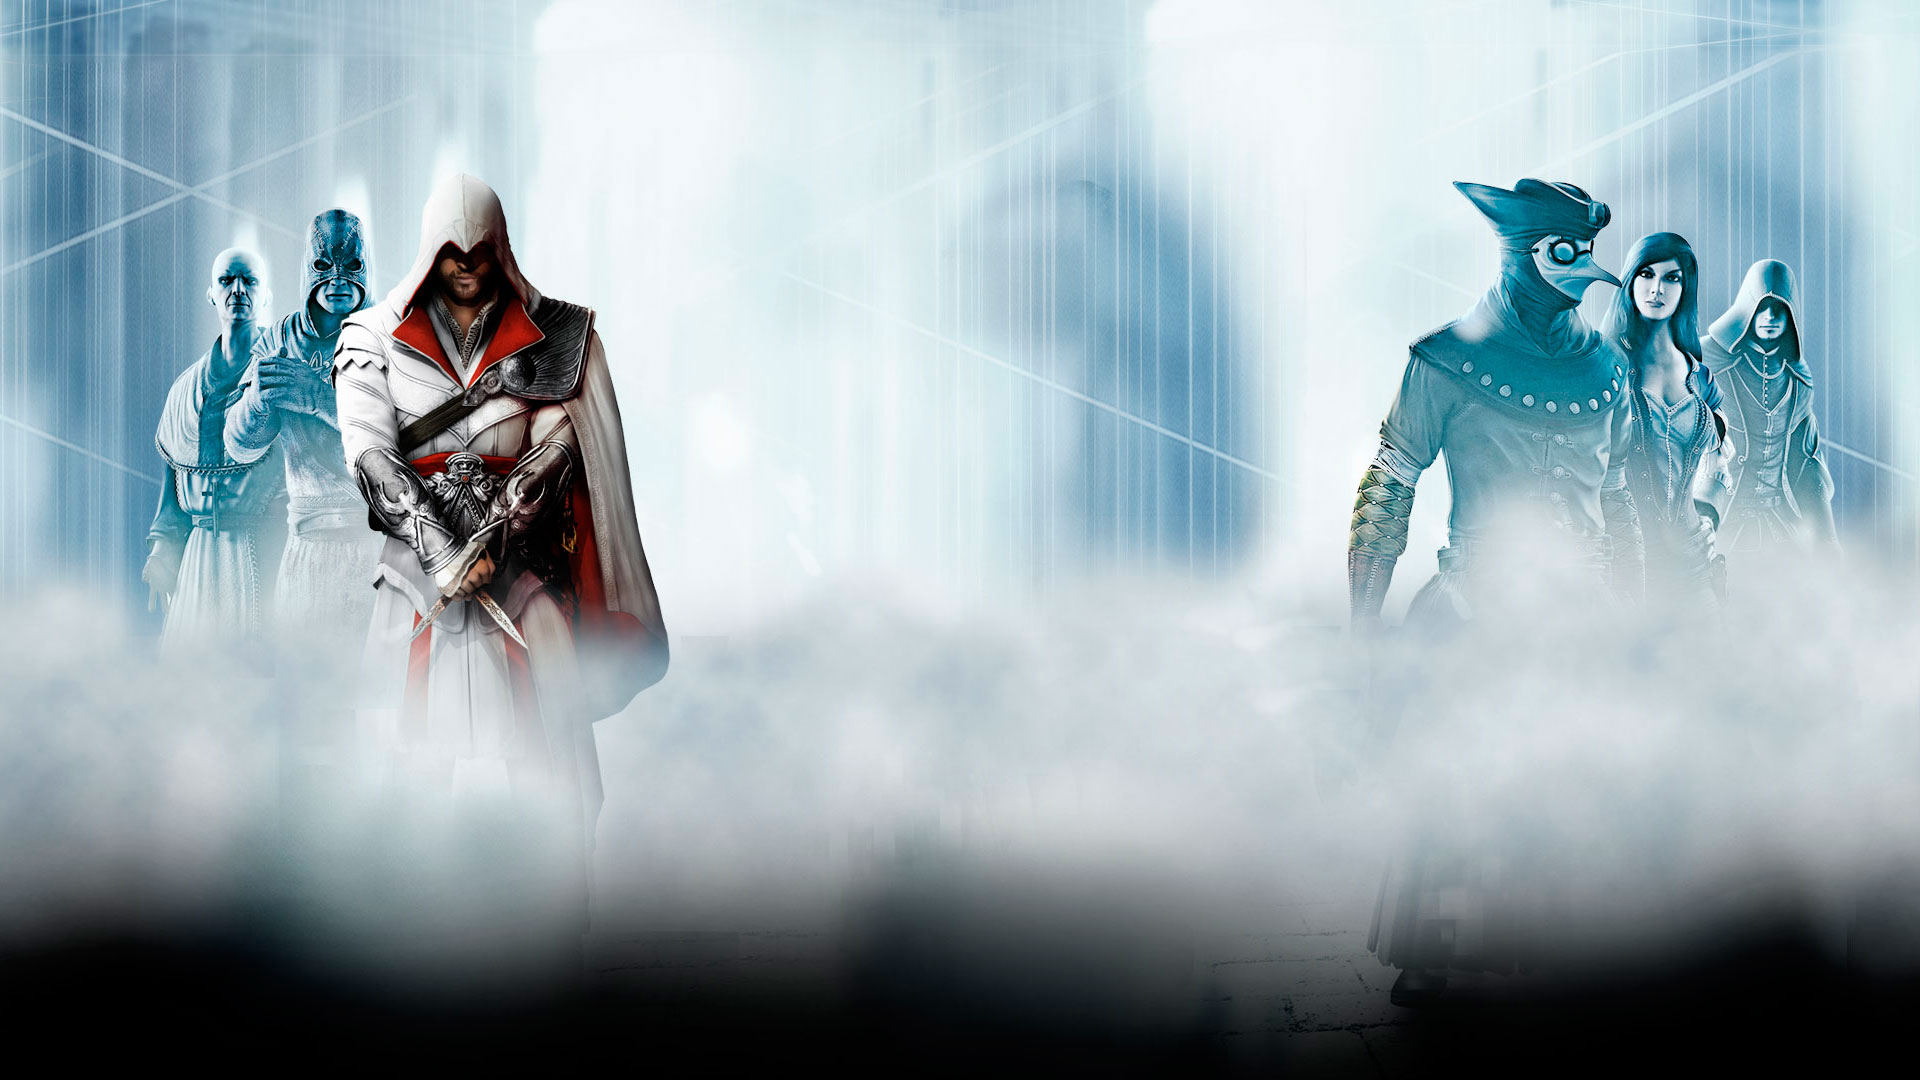 40+] Assassin's Creed Brotherhood Wallpaper HD - WallpaperSafari